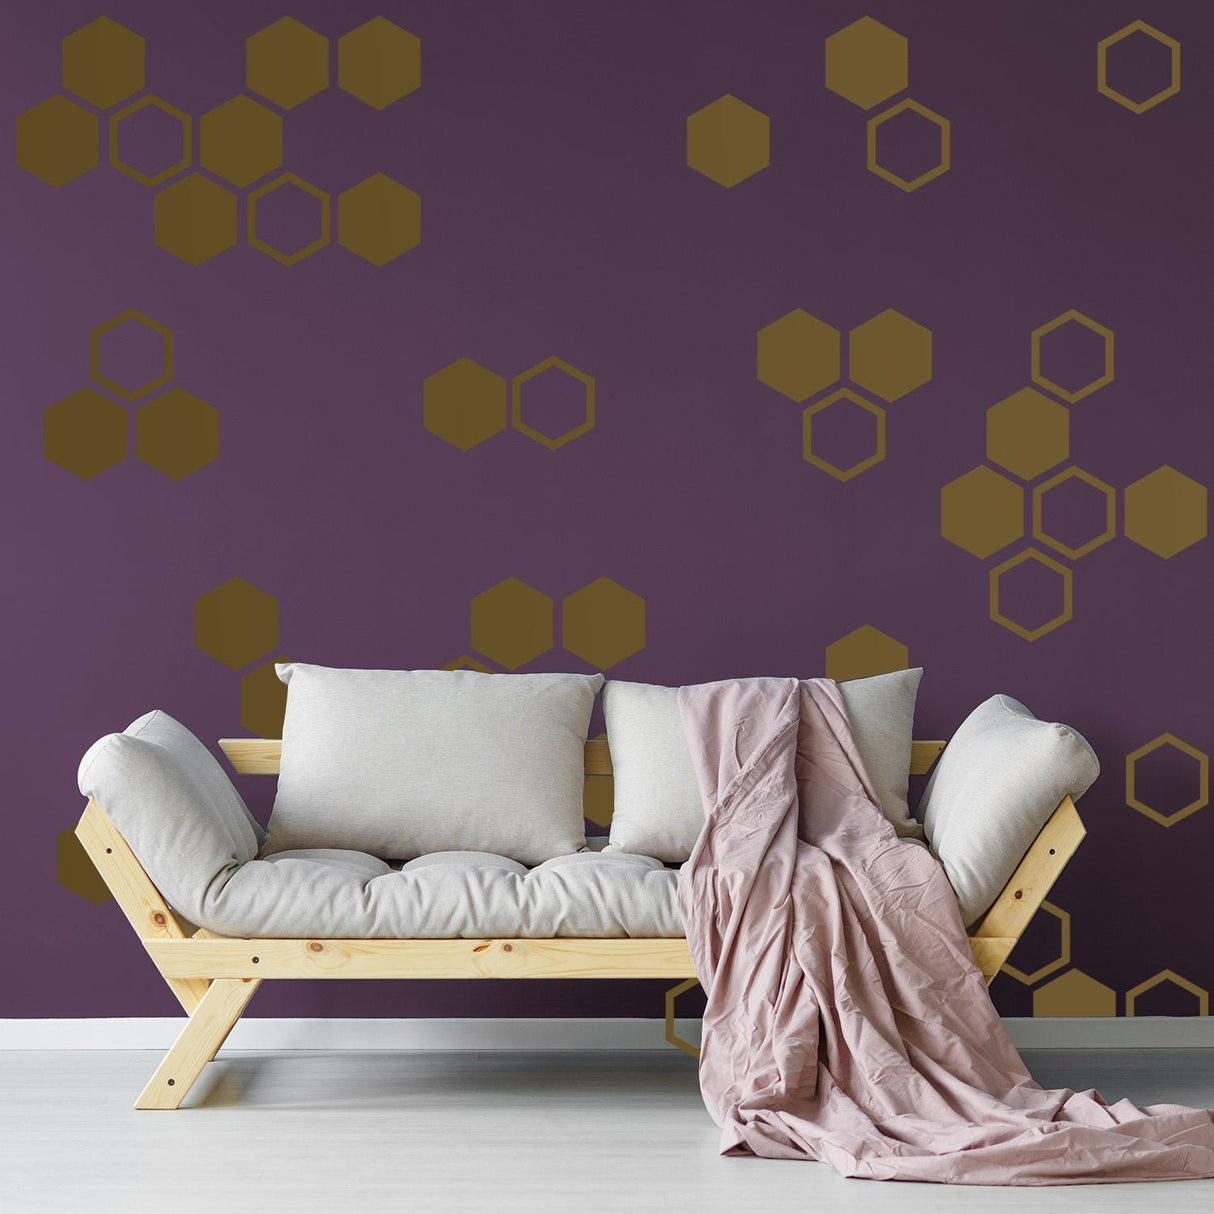 50x Honeycomb Wall Decals Decor - Geometric Hexagon Sticker For Bedroom Living Room